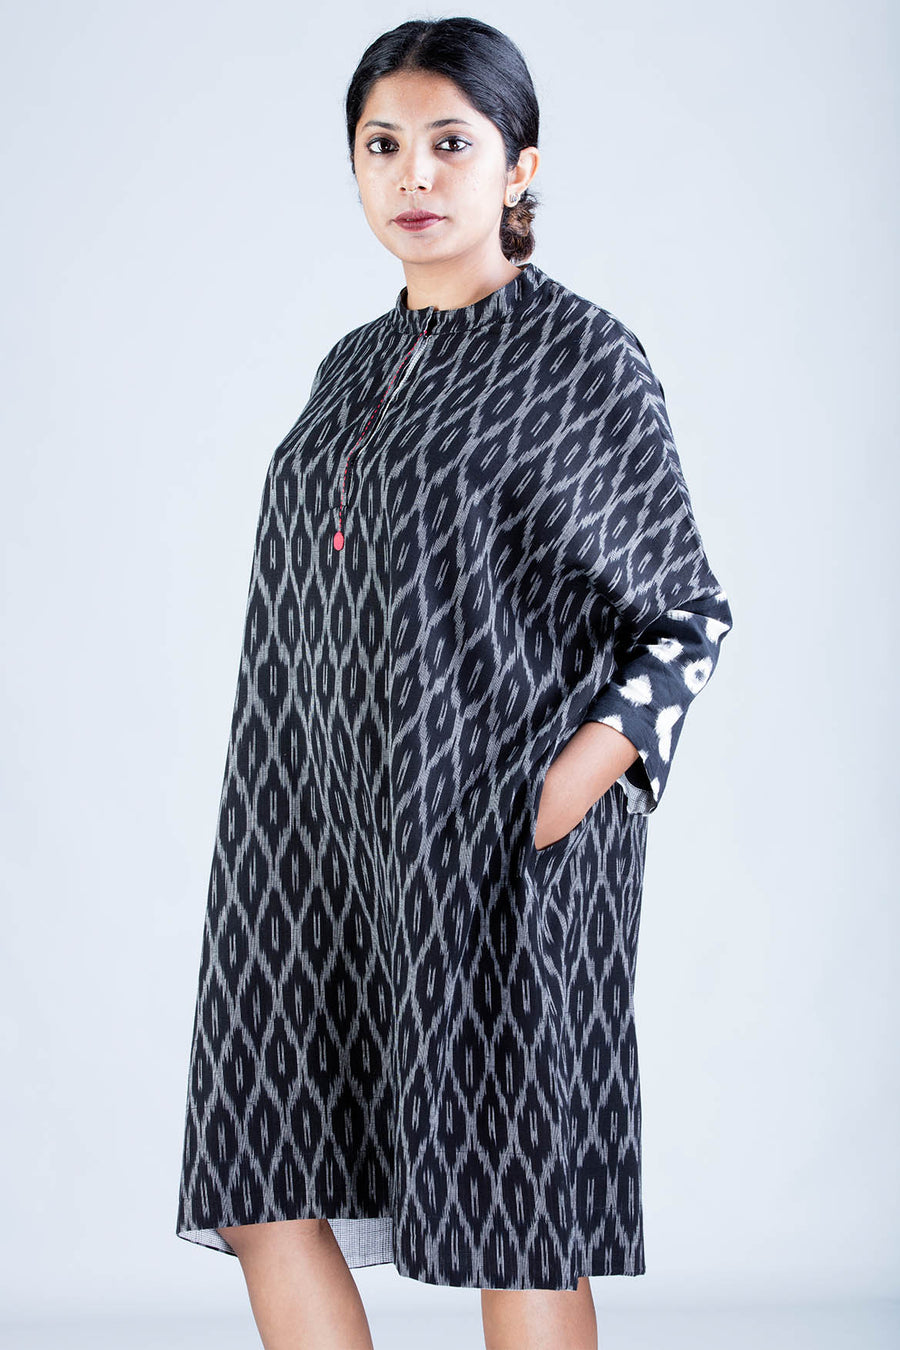 Black Ikat Dress - MUKTA - Upasana Design Studio